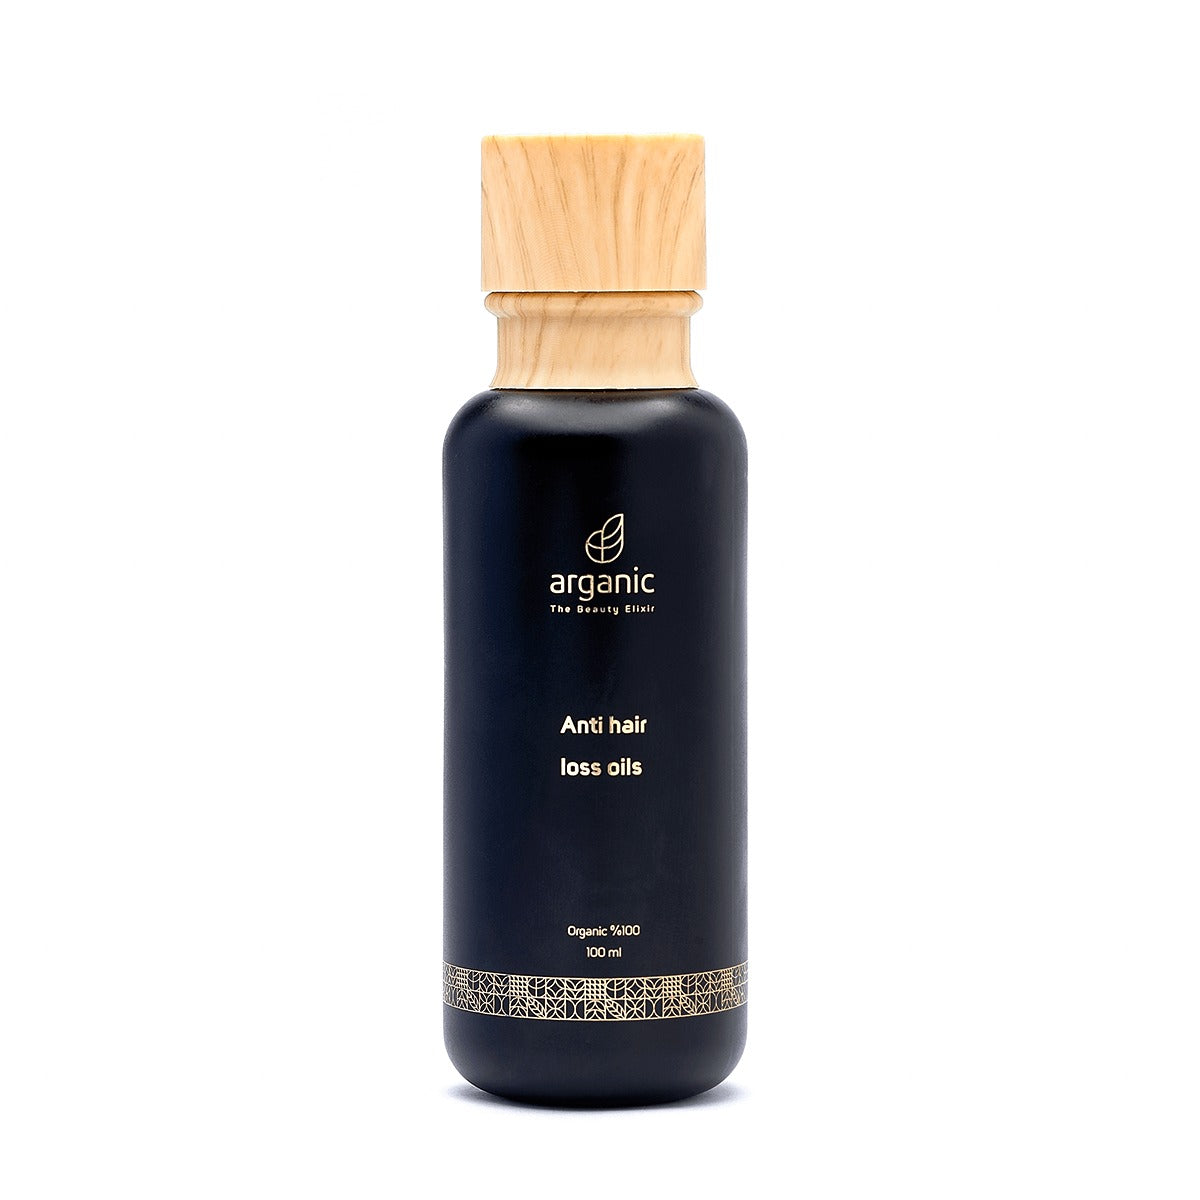 Dark blue Arganic anti hair loss oil bottle with wooden cap